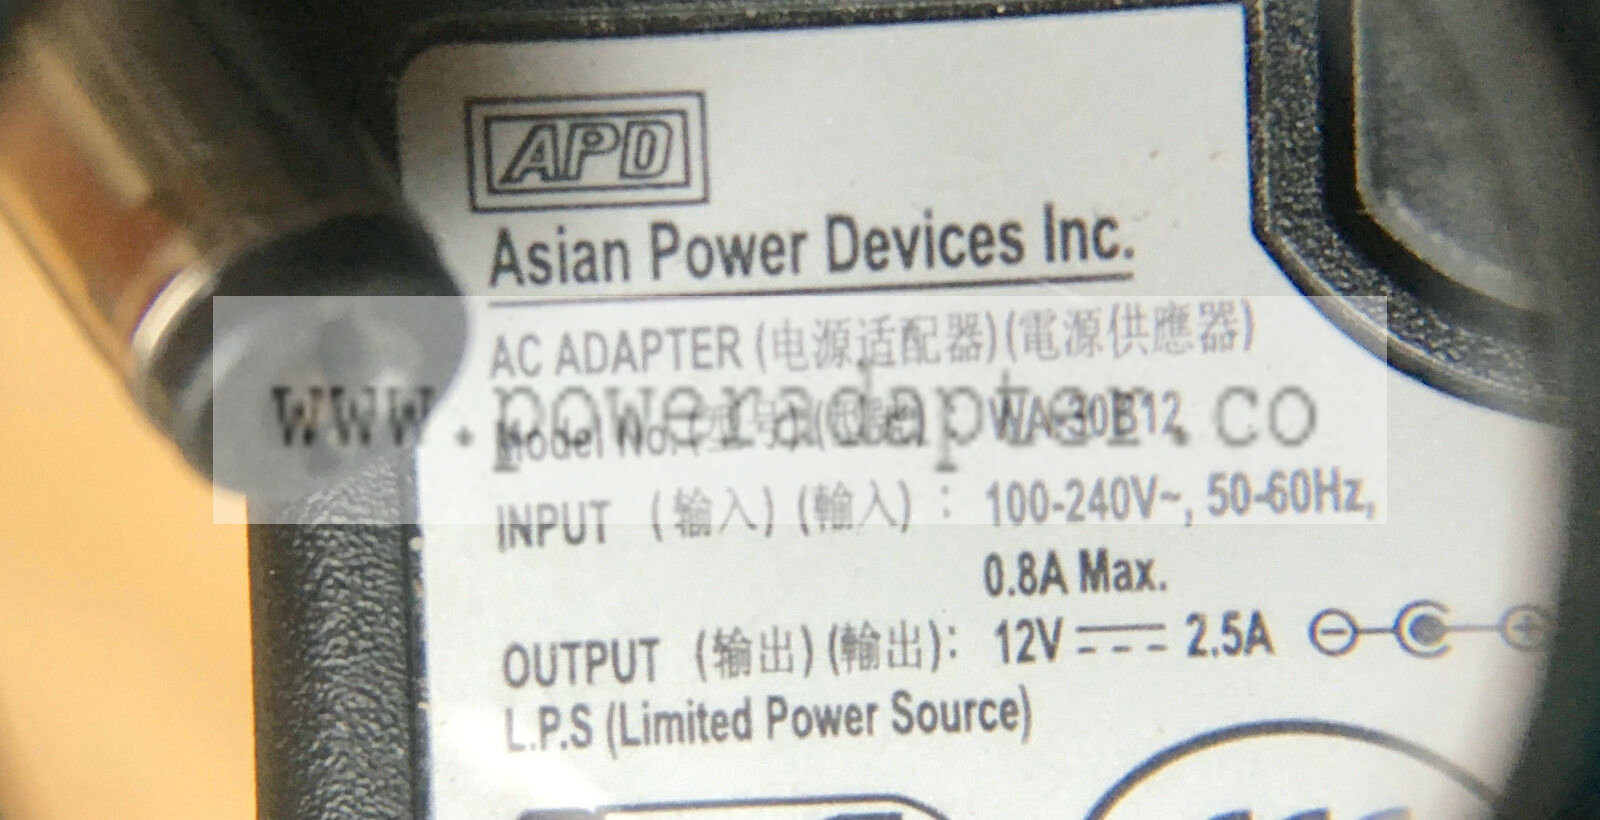 APD WA-30B12K 12V DC 2.5A 2500mA Plug Adaptor PSU Power Supply mains adapter Good working condition Asian Power Device